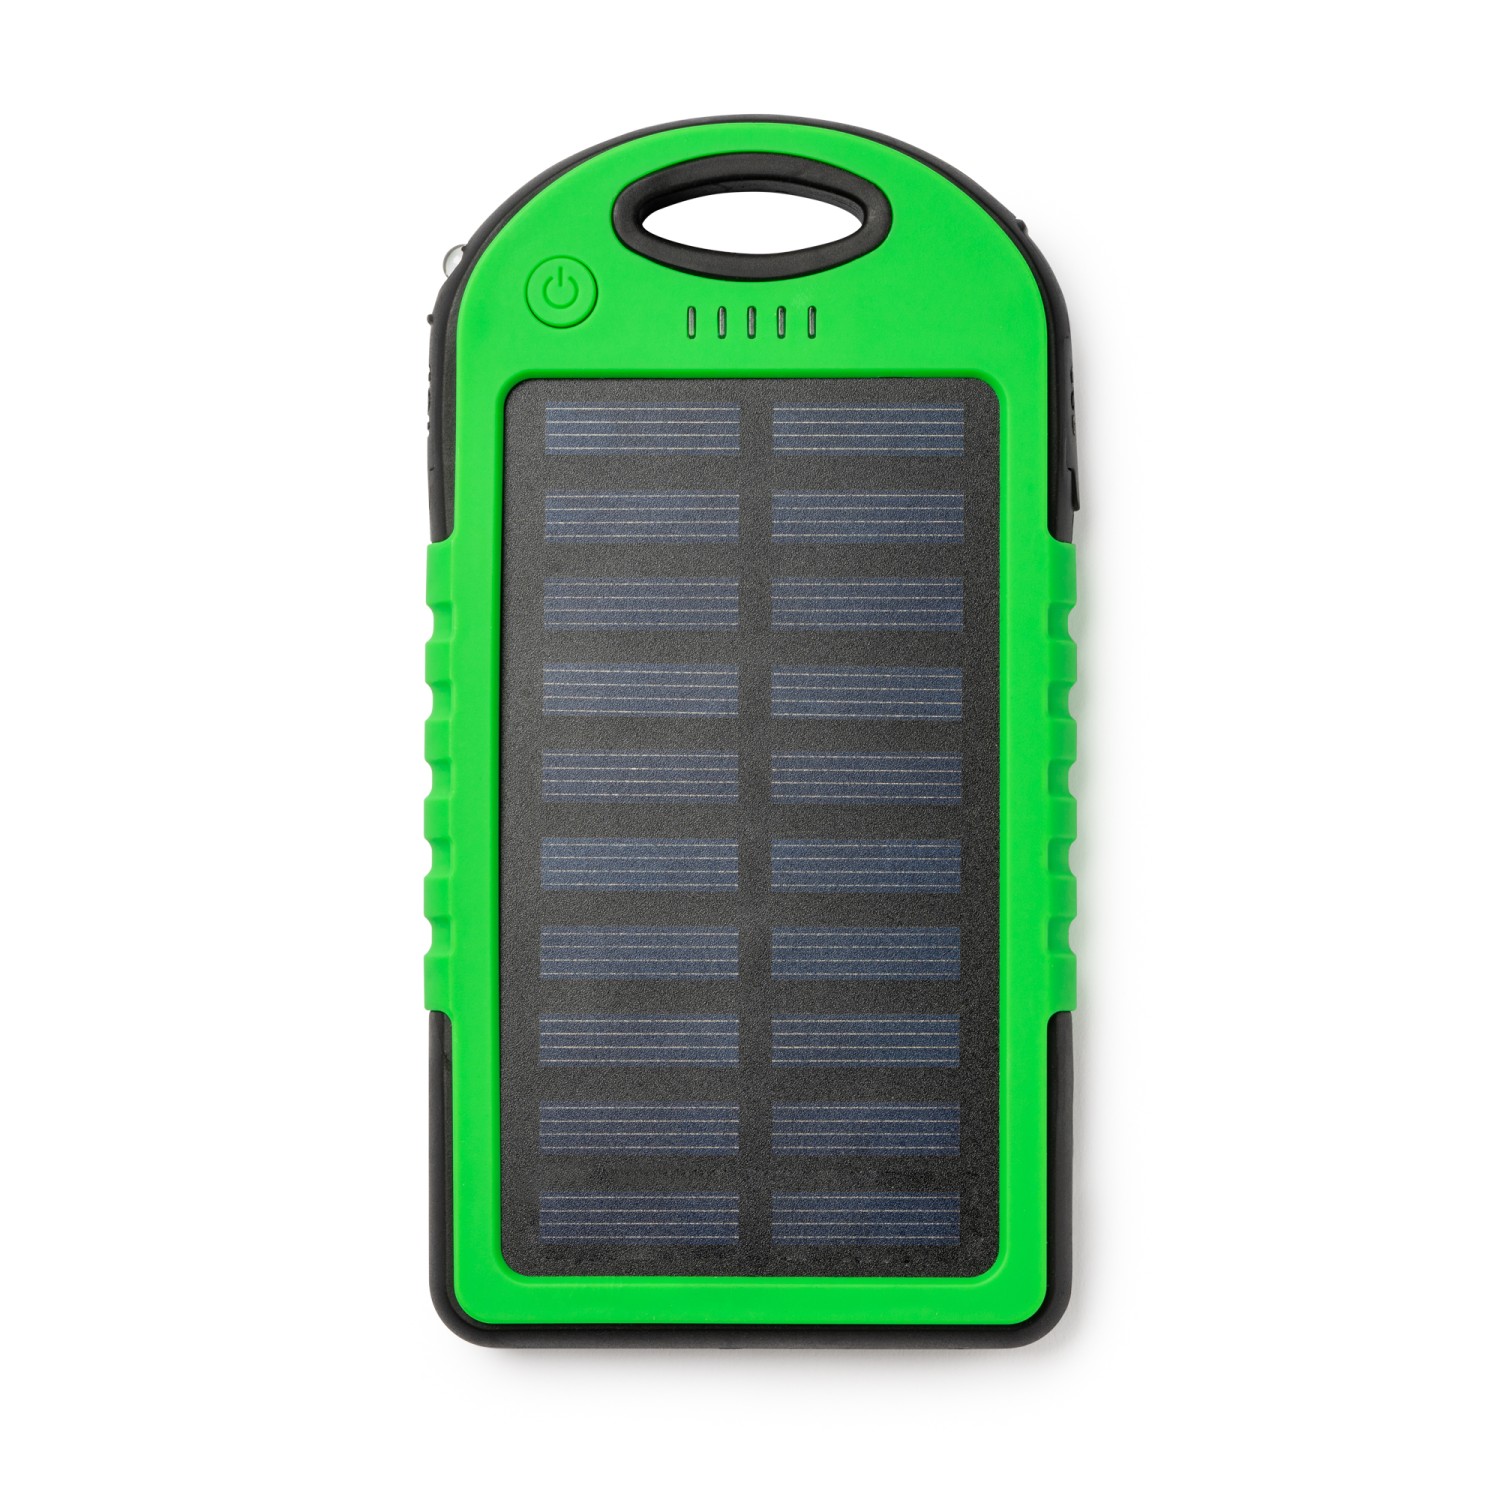 Bateria Externa Solar